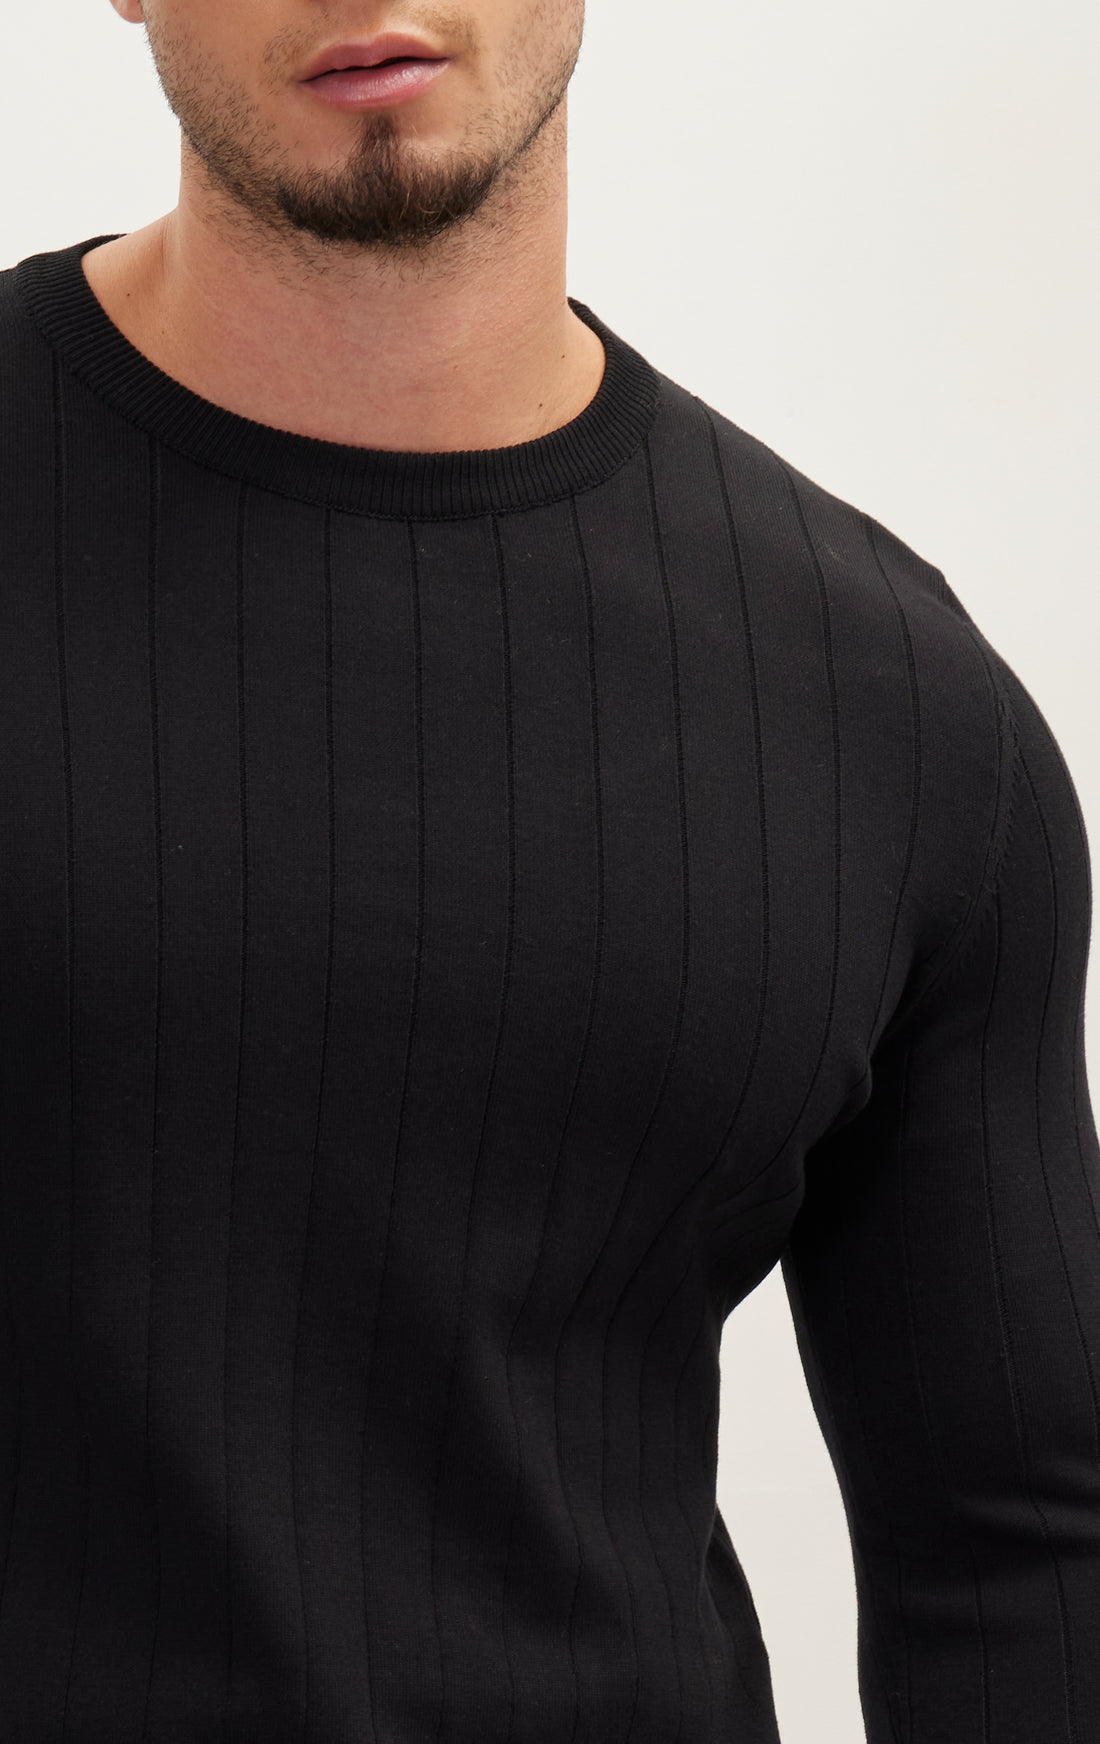 Slip-Stitch Crew Neck Long Sleeve Sweater - Black